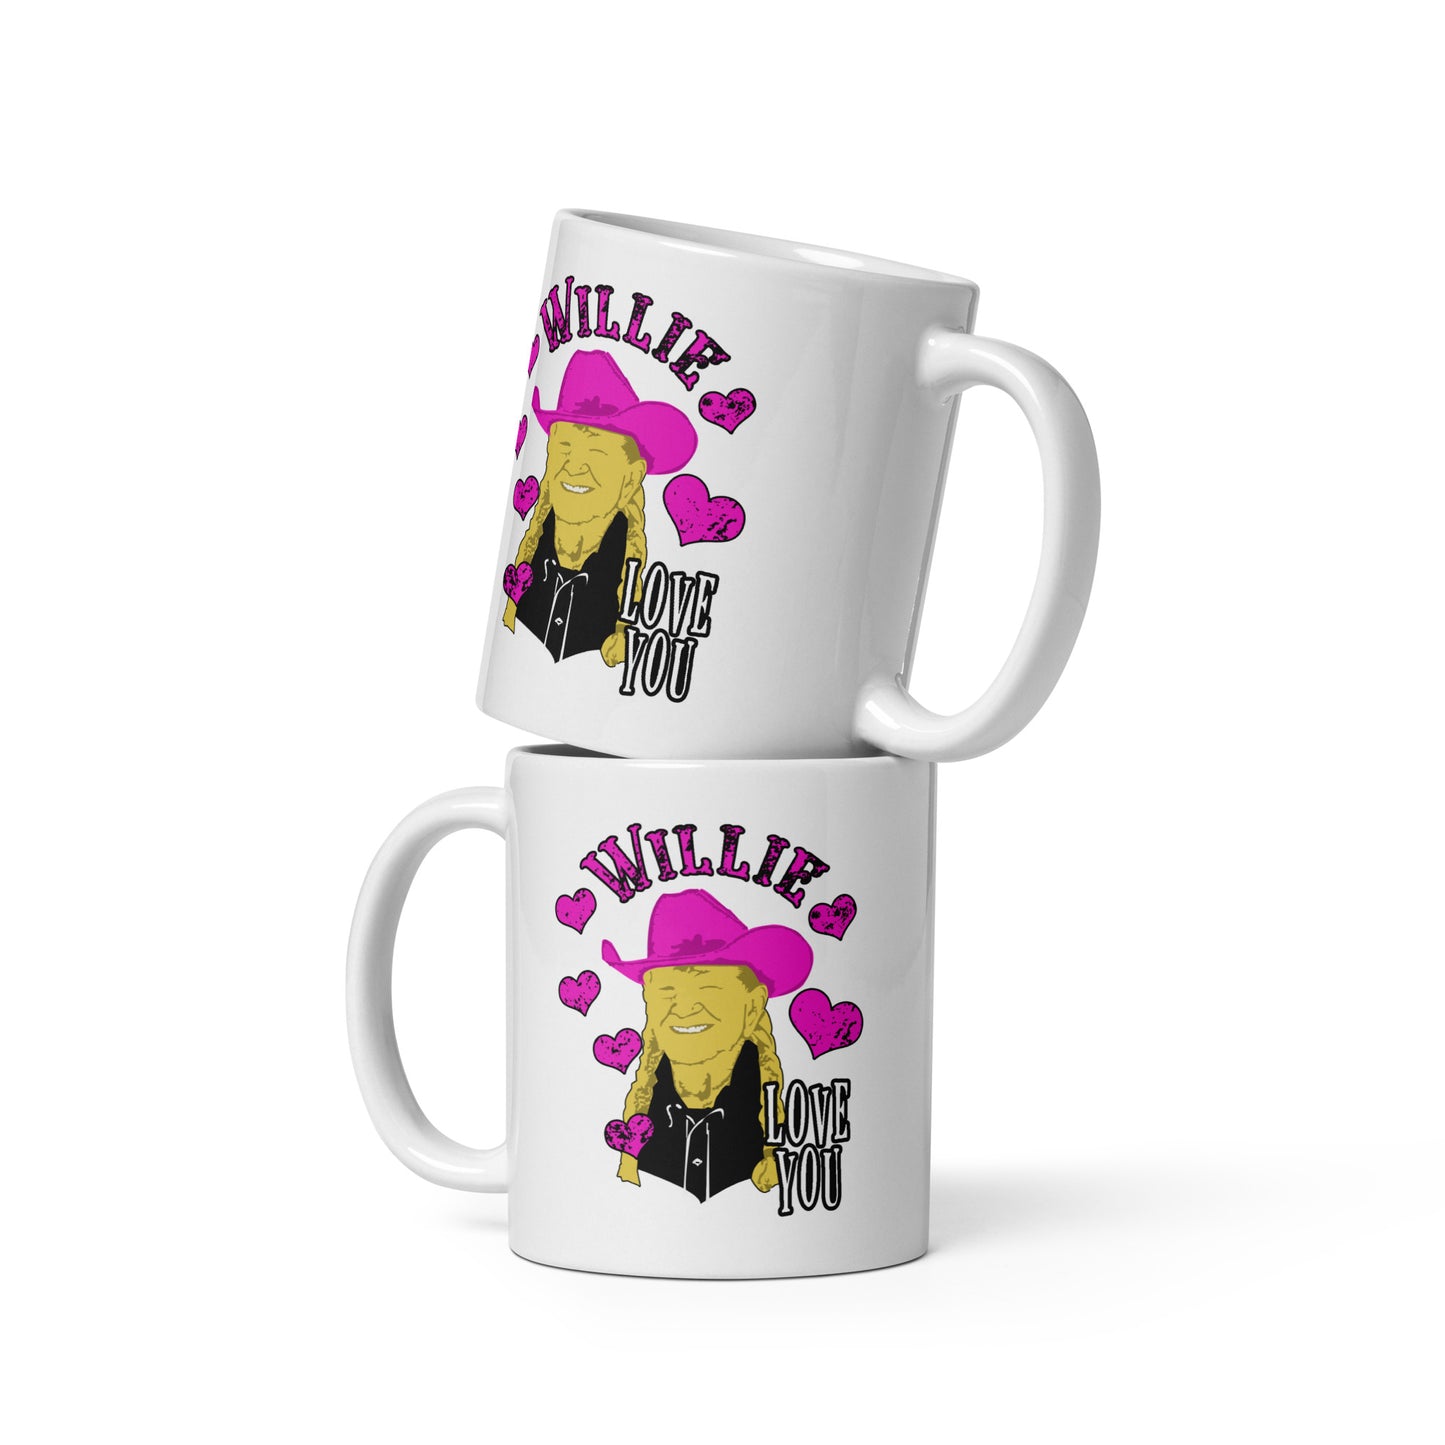 Willie Nelson "Willie Love you" White glossy mug